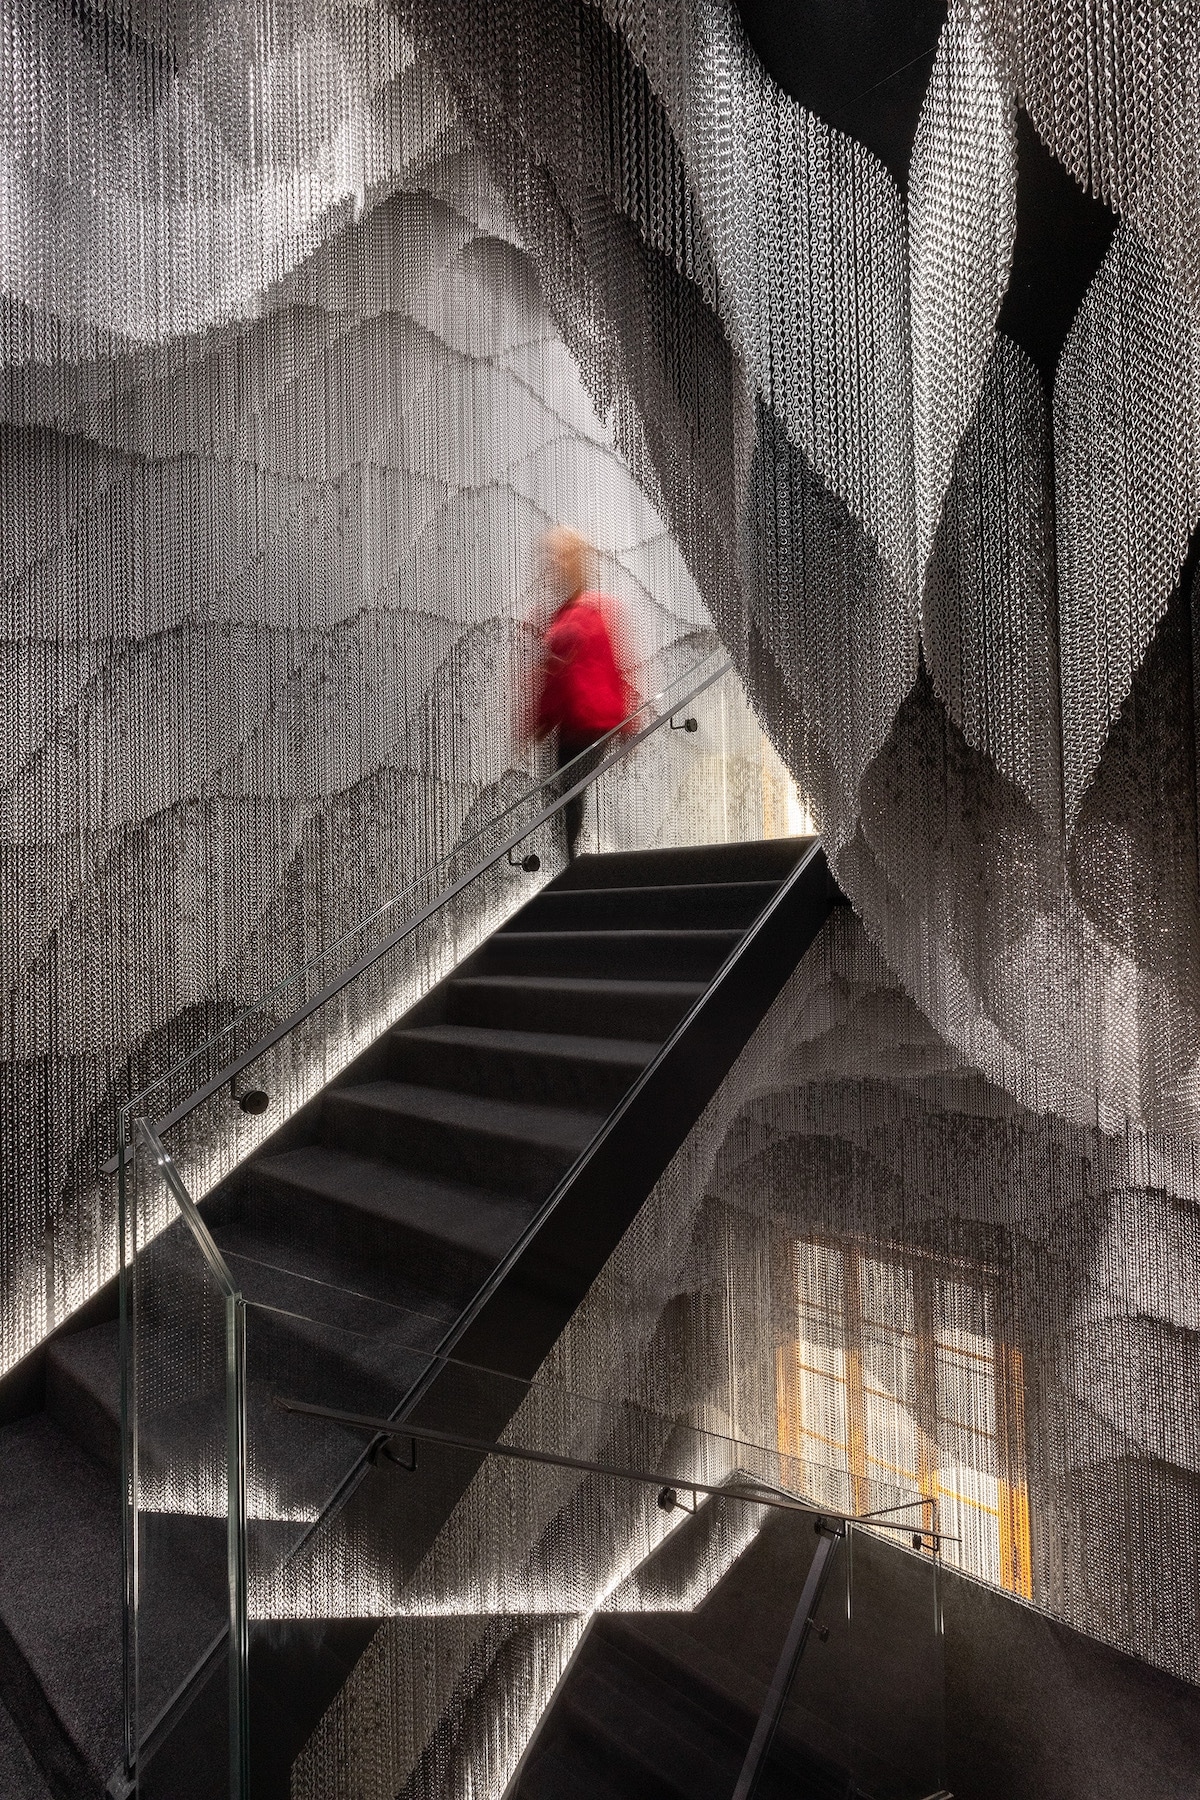 Casa Batlló 10D Experience featuring Kengo Kuma-designed Staircase